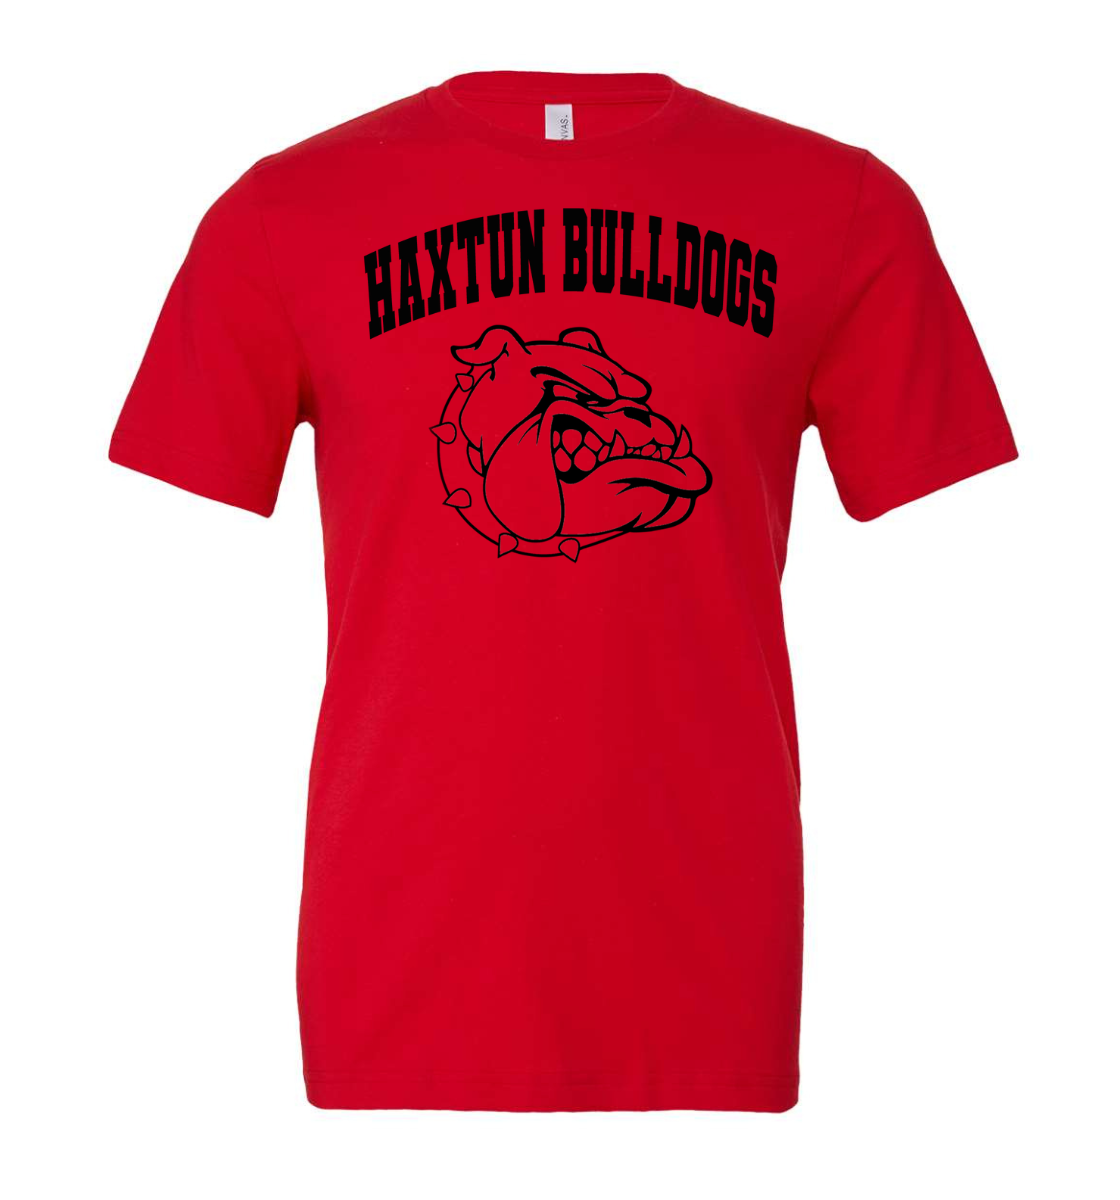 haxtun bulldogs t-shirt: for bulldogs fans only!